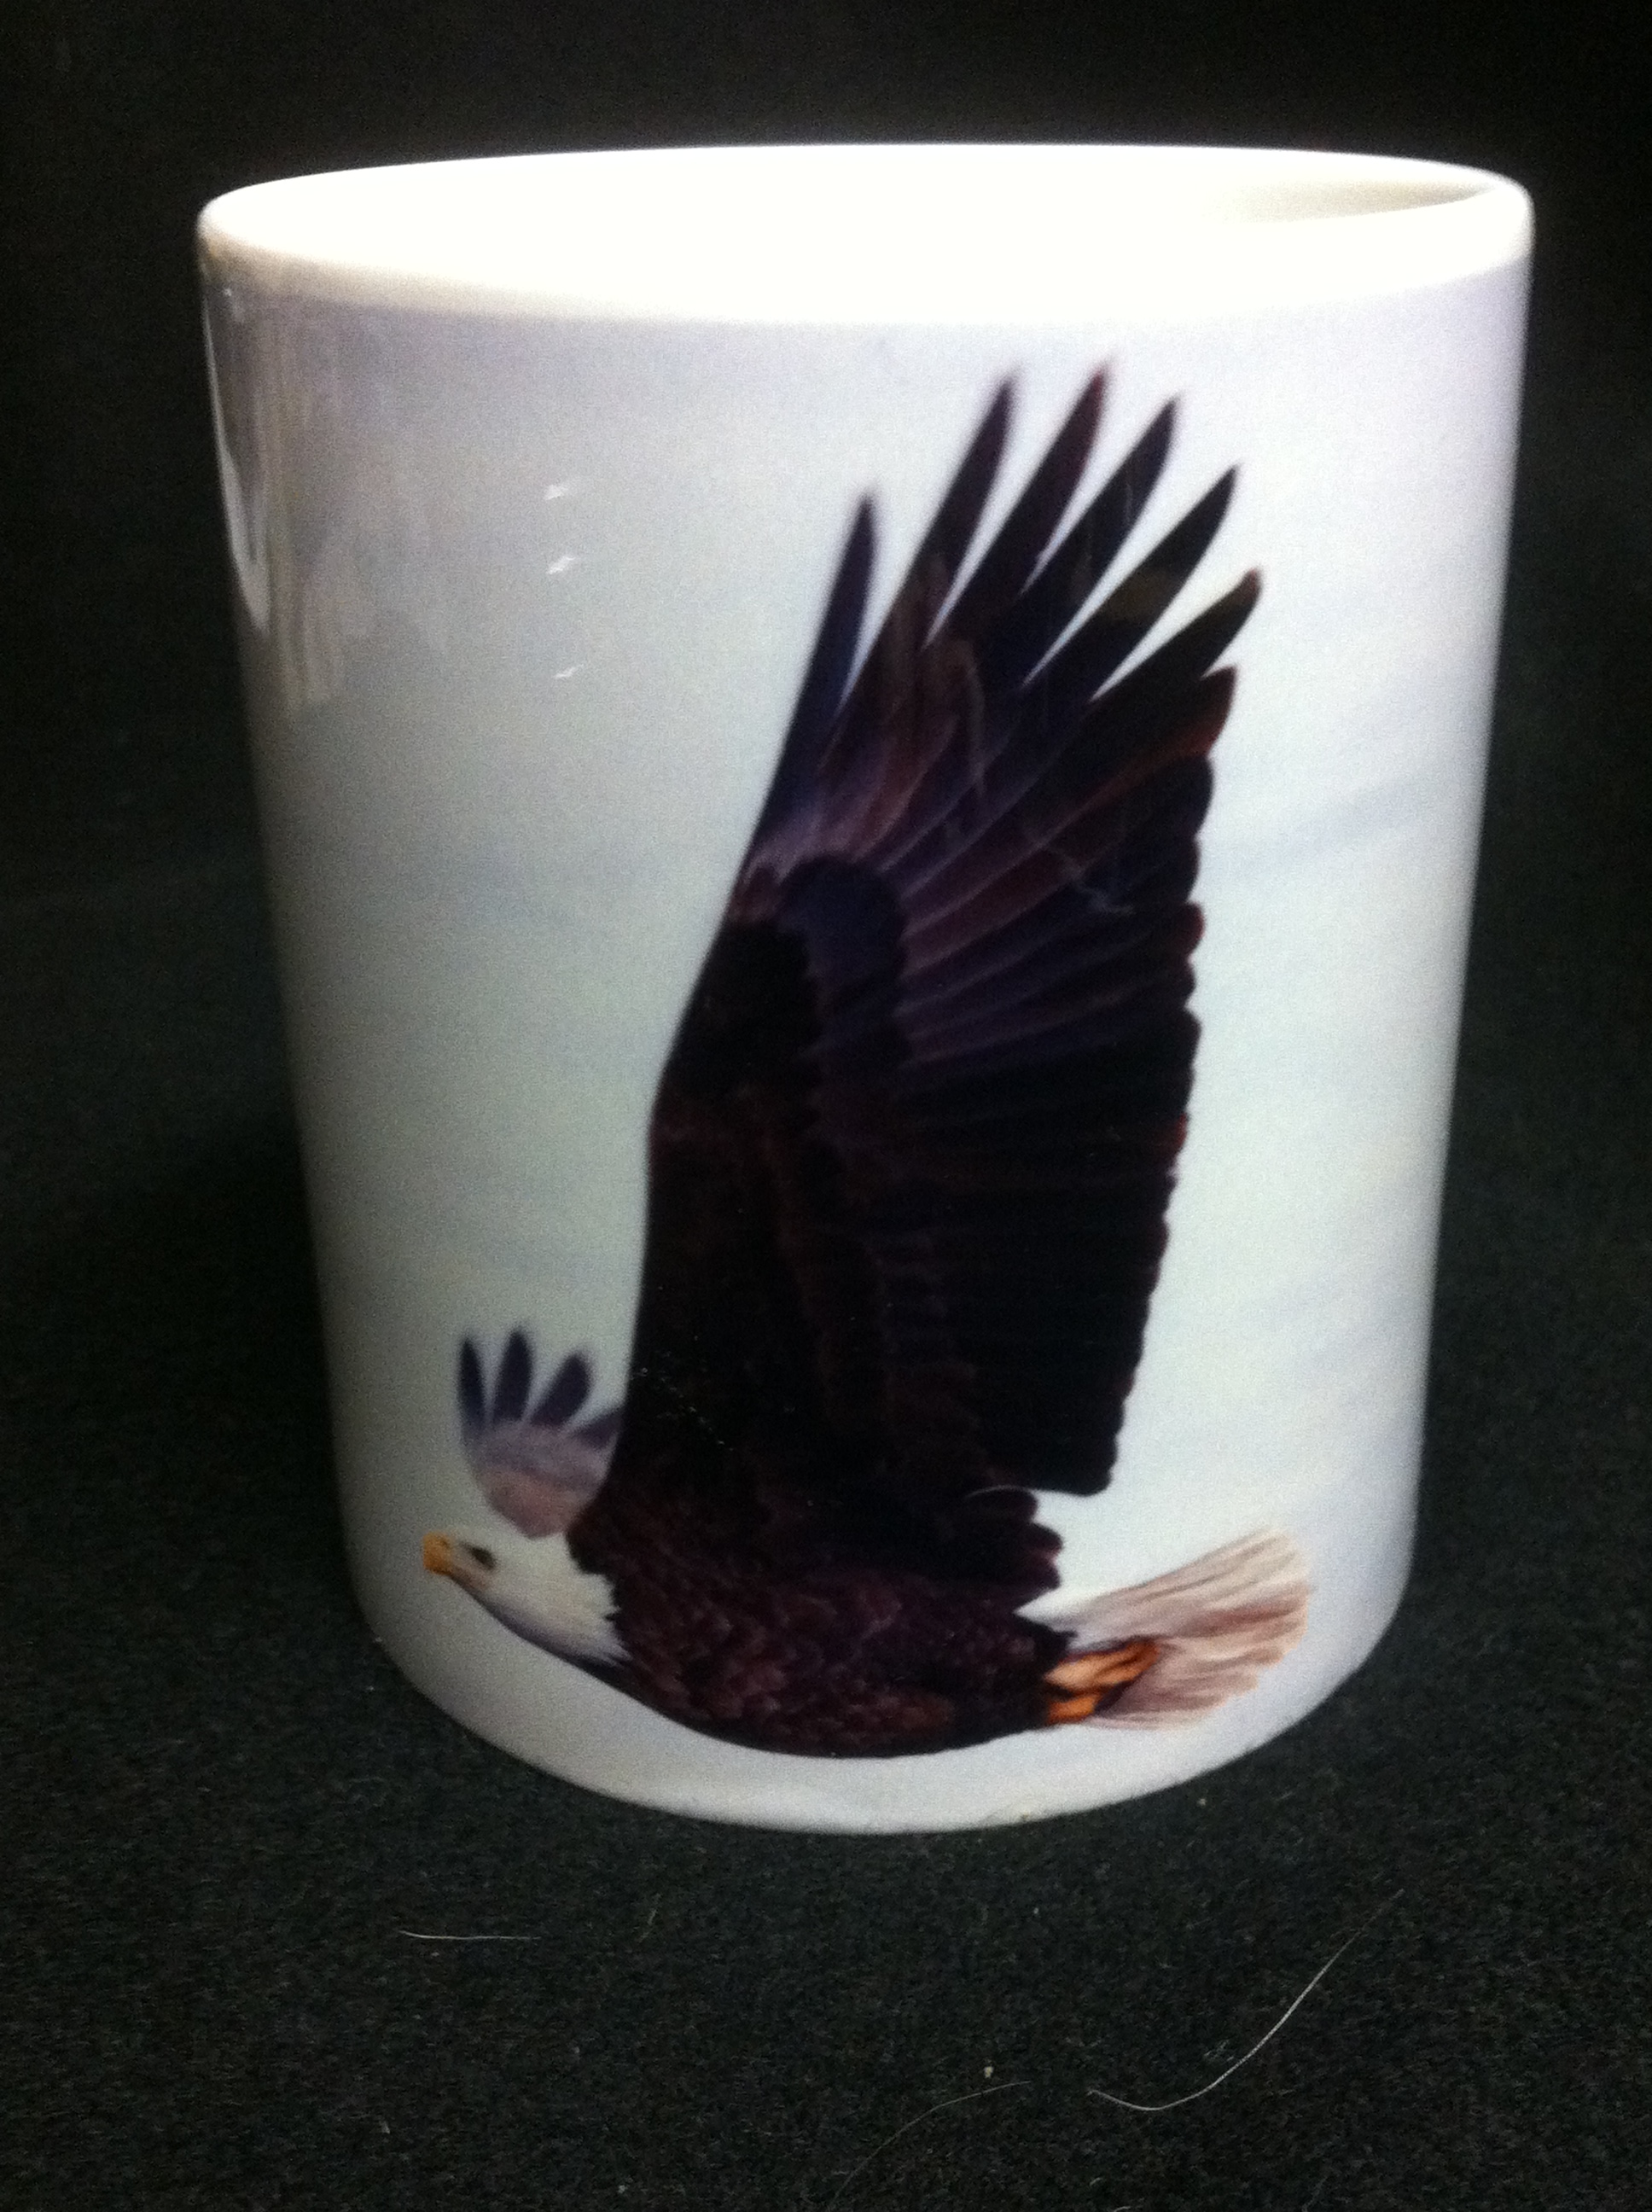 Eagle Mug #2 made with sublimation printing